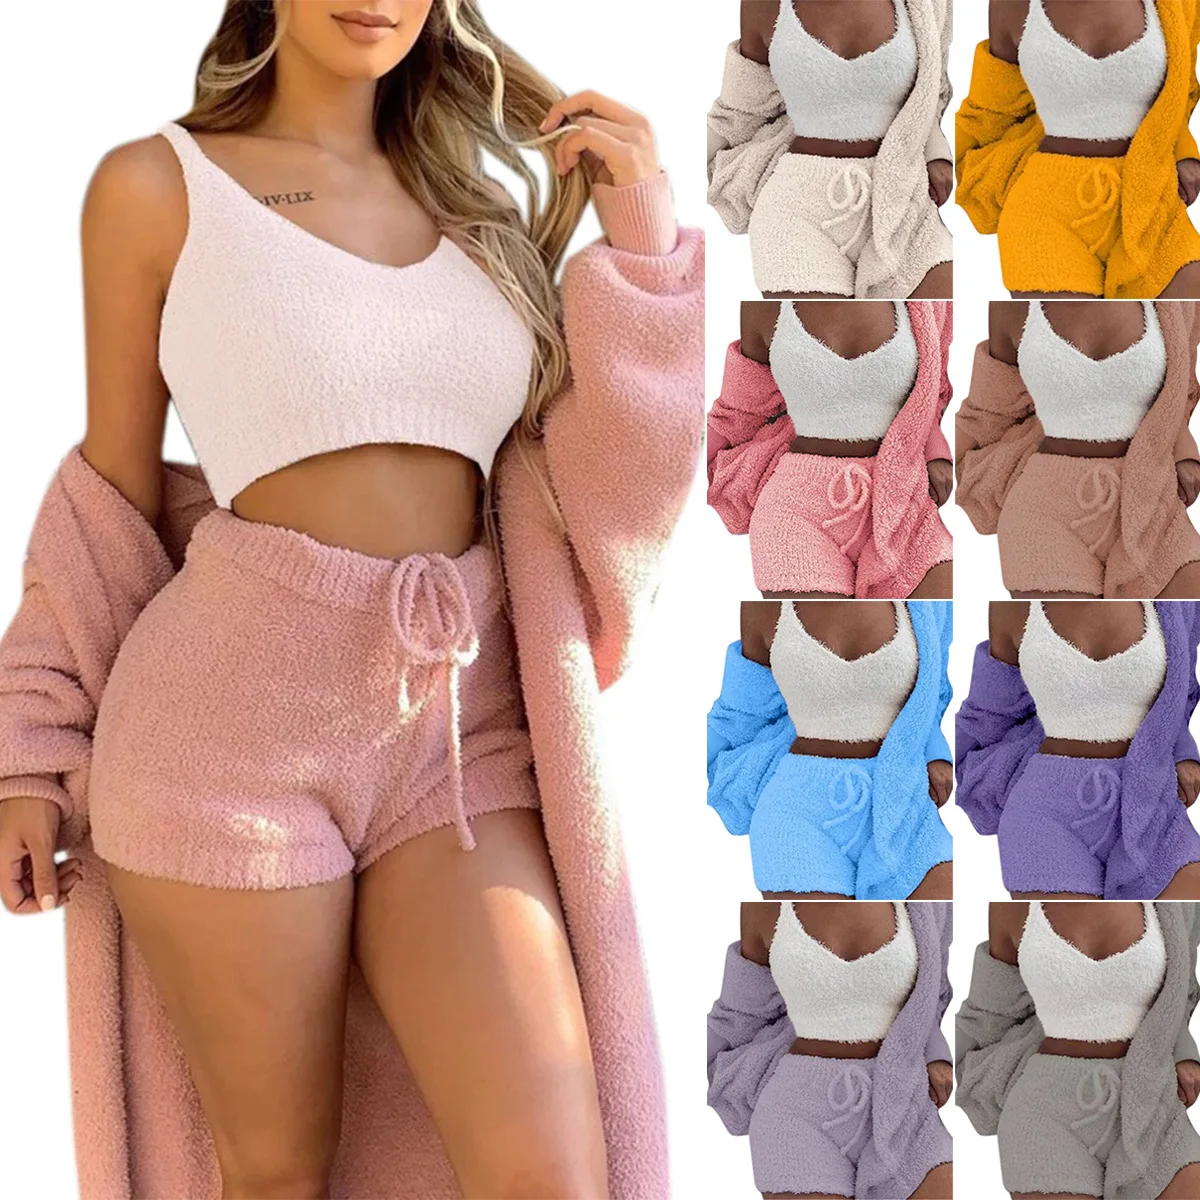 

Fall 2021 Women Clothes Fuzzy Lingerie Suit 3 Piece Sleepwear Set Winter Cozy Loungewear Sets Furry Pajamas For Women Set, Picture shows